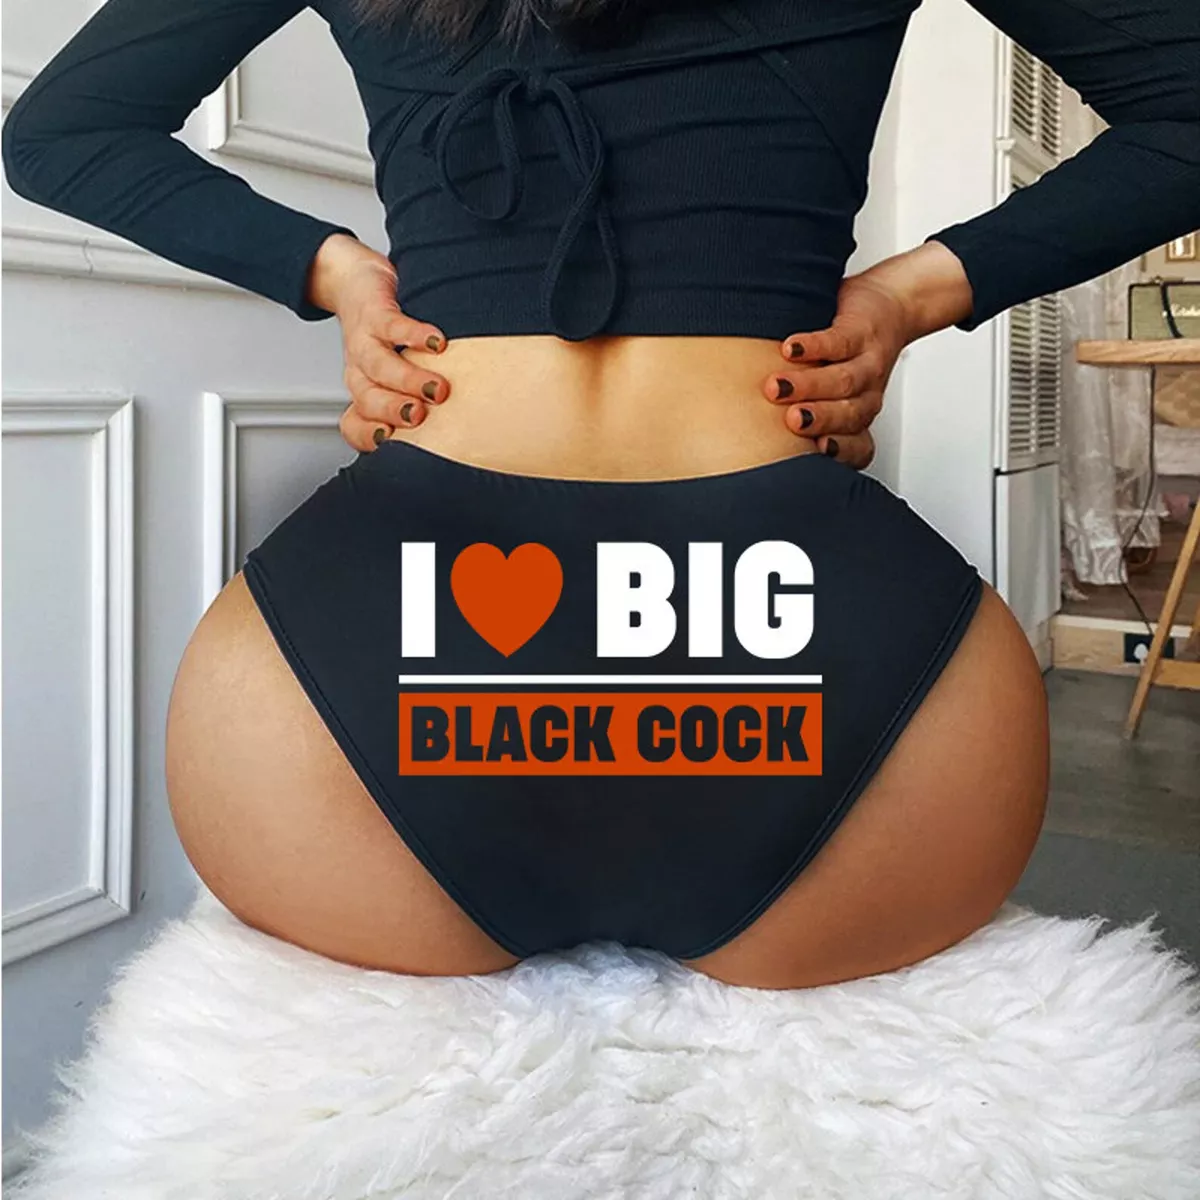 antonio servin recommends women who love big dick pic